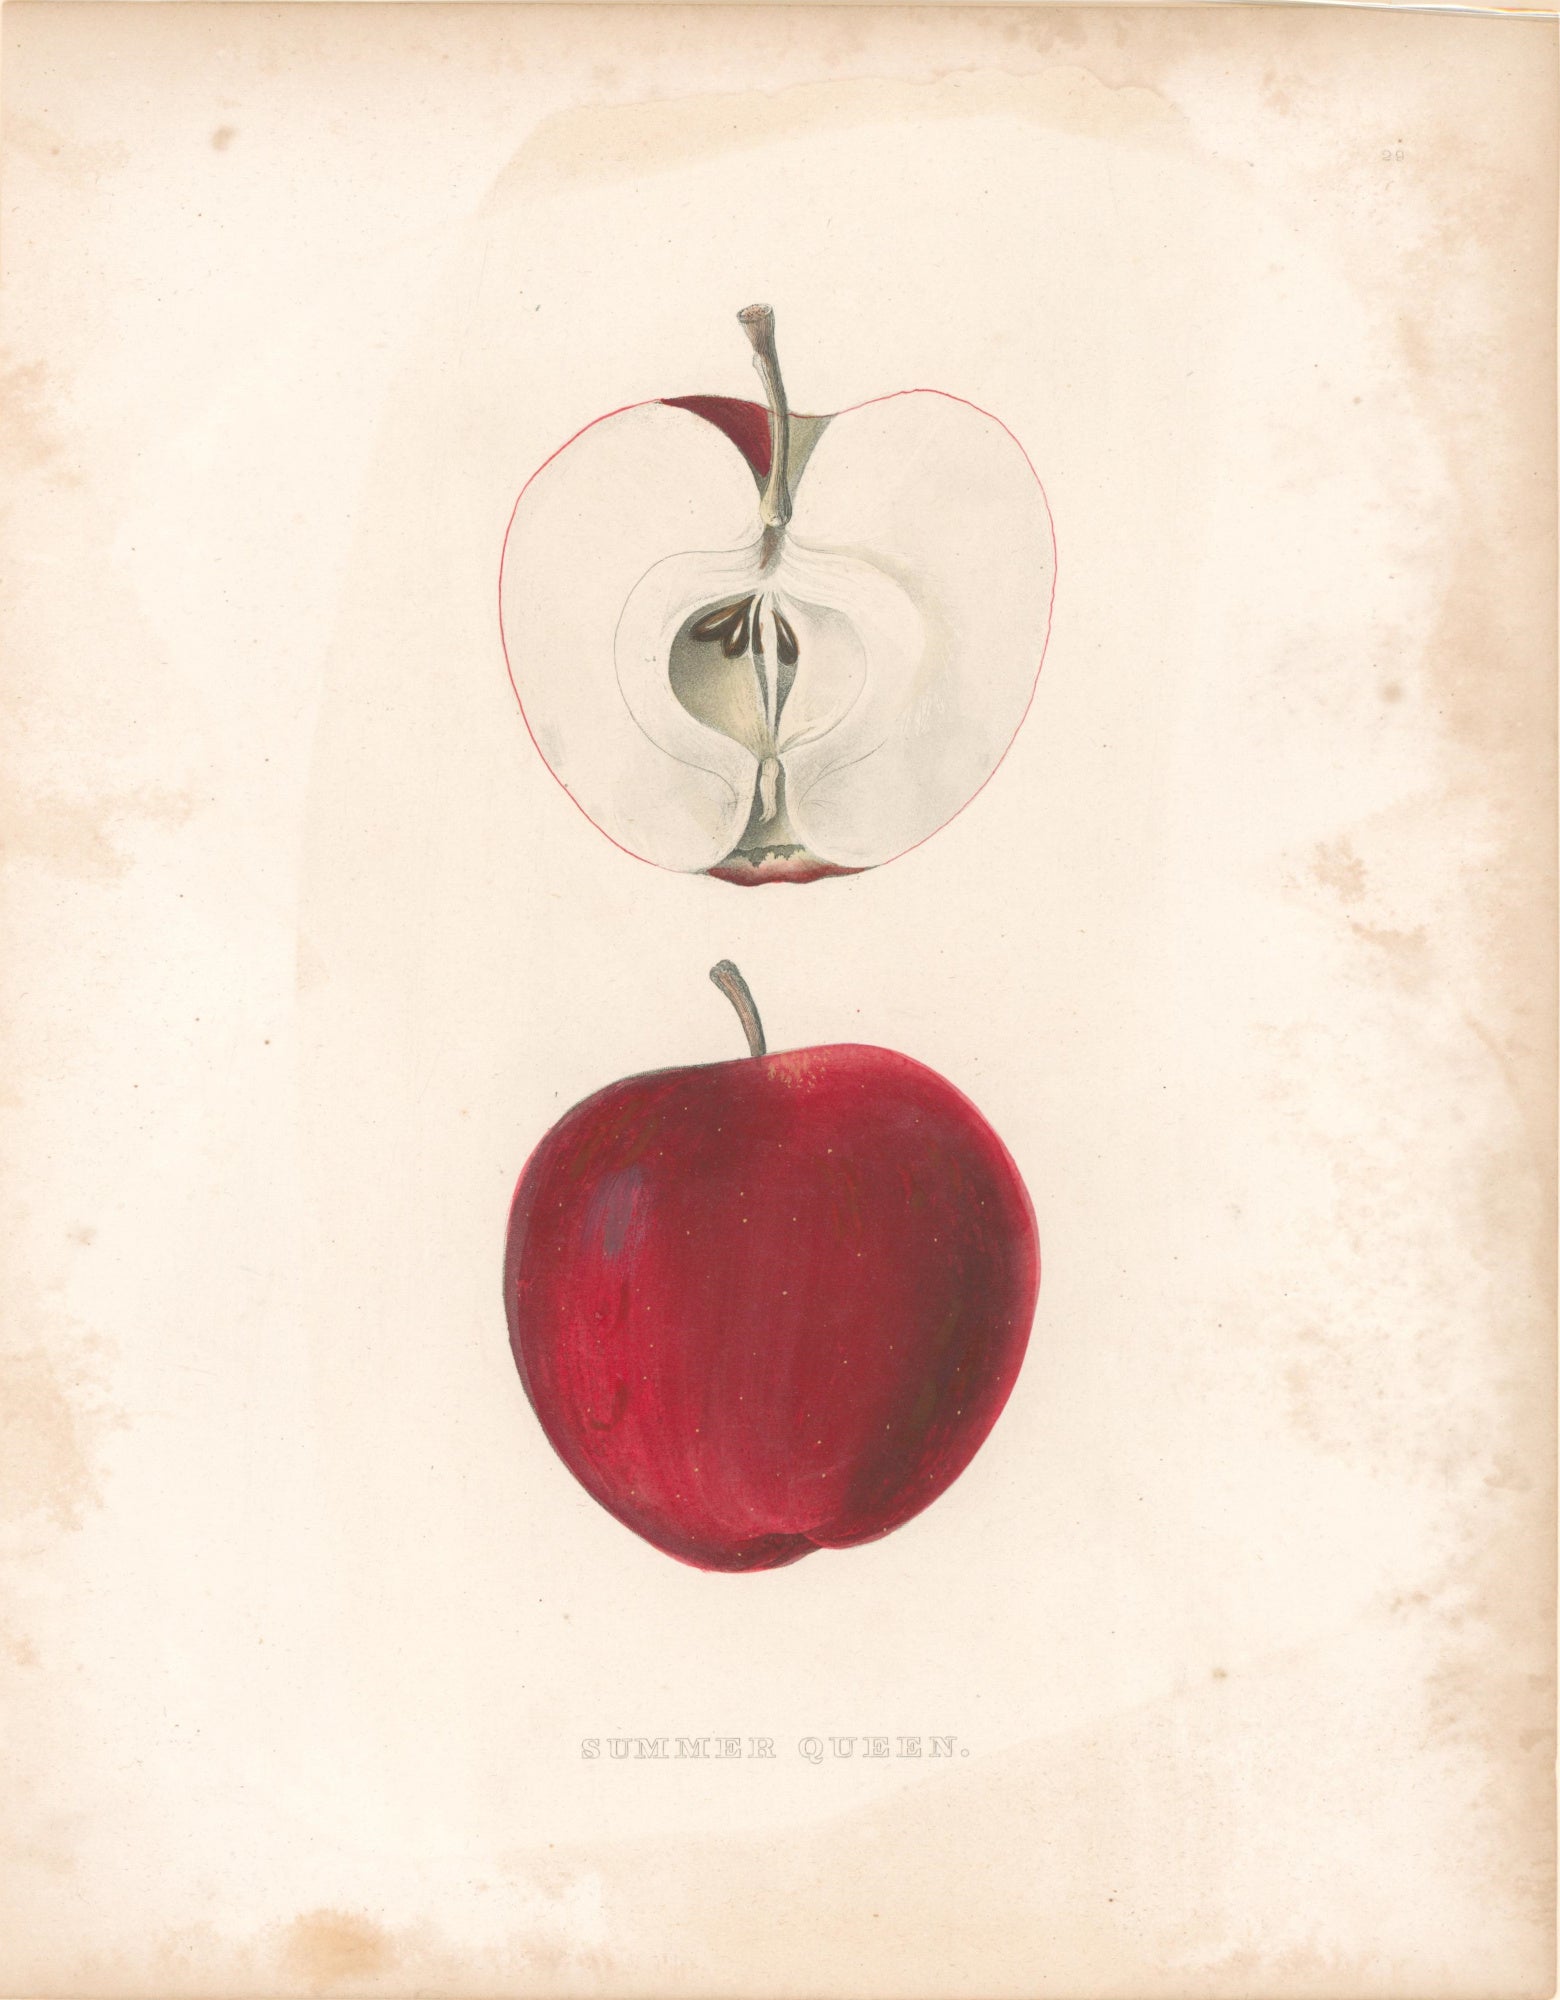 Unattributed “Summer Queen” [apple] Plate 29 – Philadelphia Print Shop